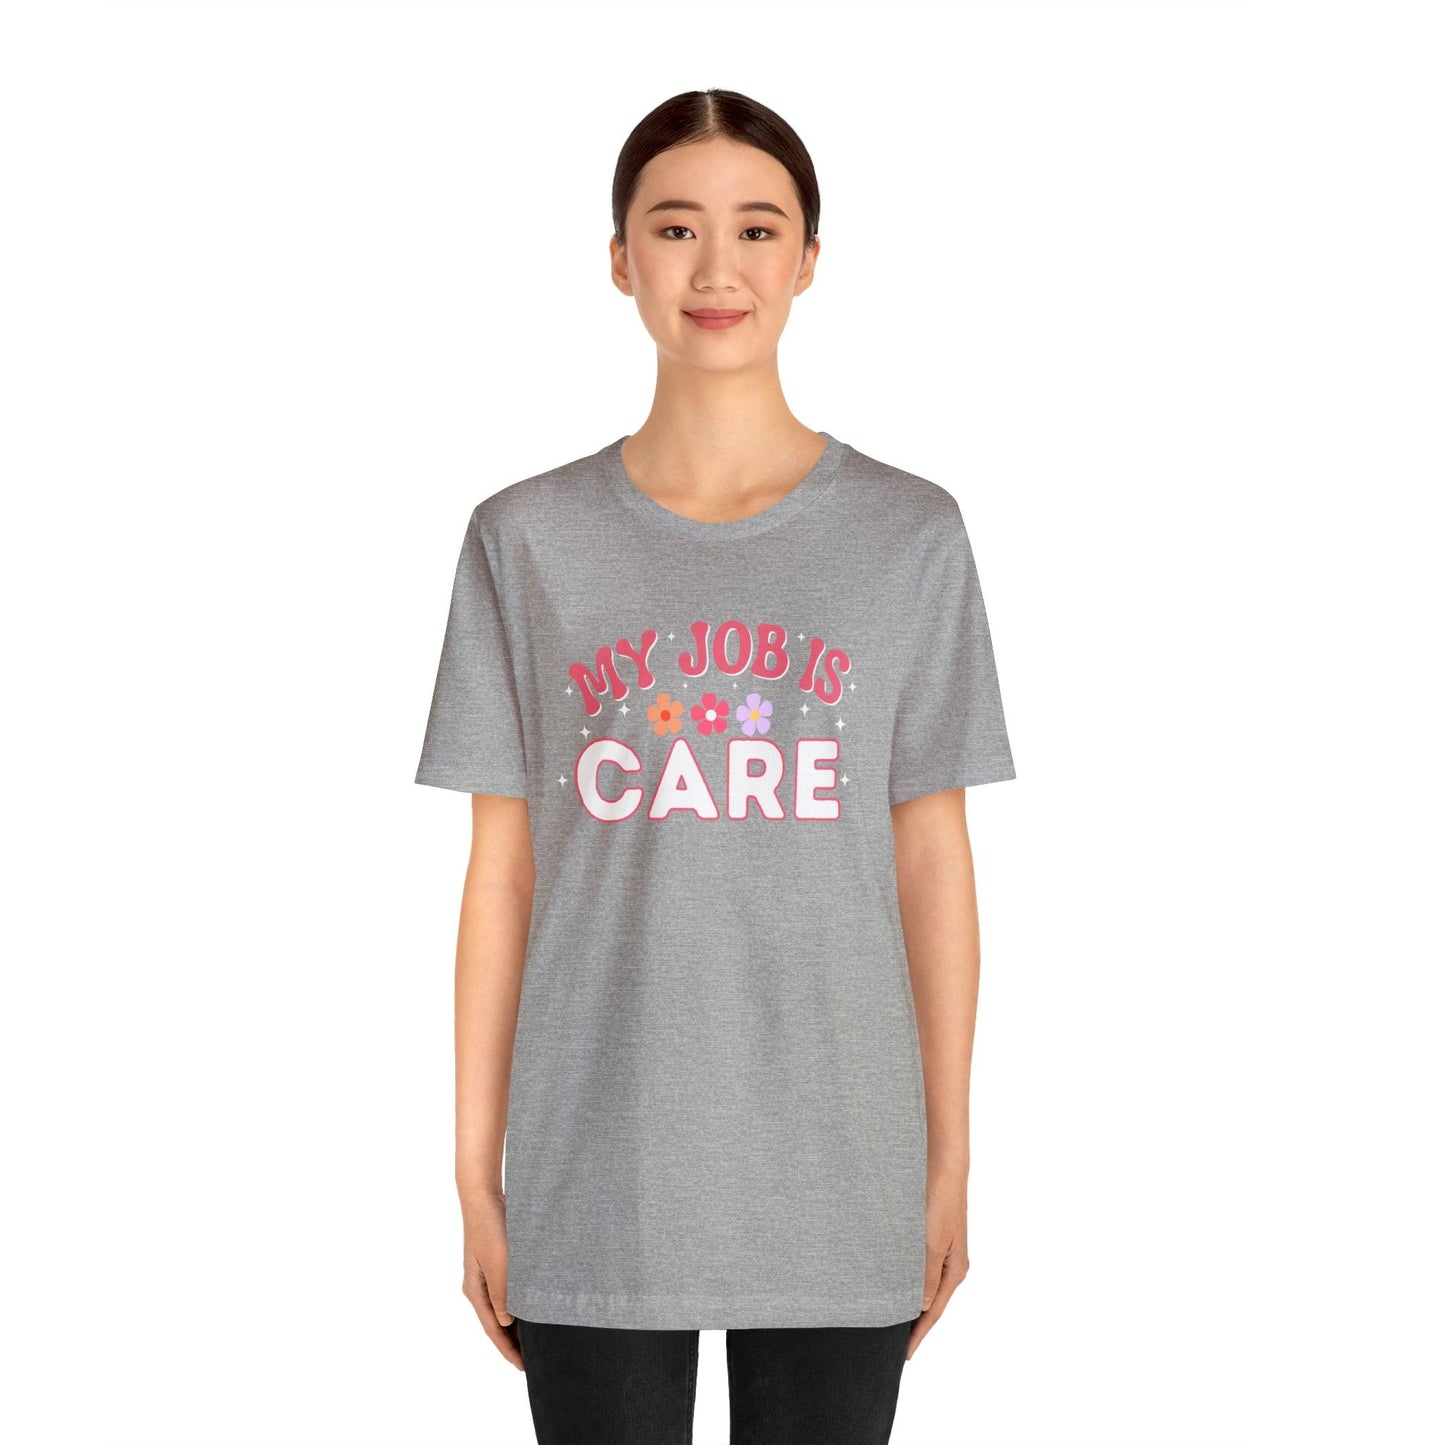 My Job is Care Shirt License Practicing Nurse Shirt, Nurses Assistant Shirt CNA shirt - Giftsmojo